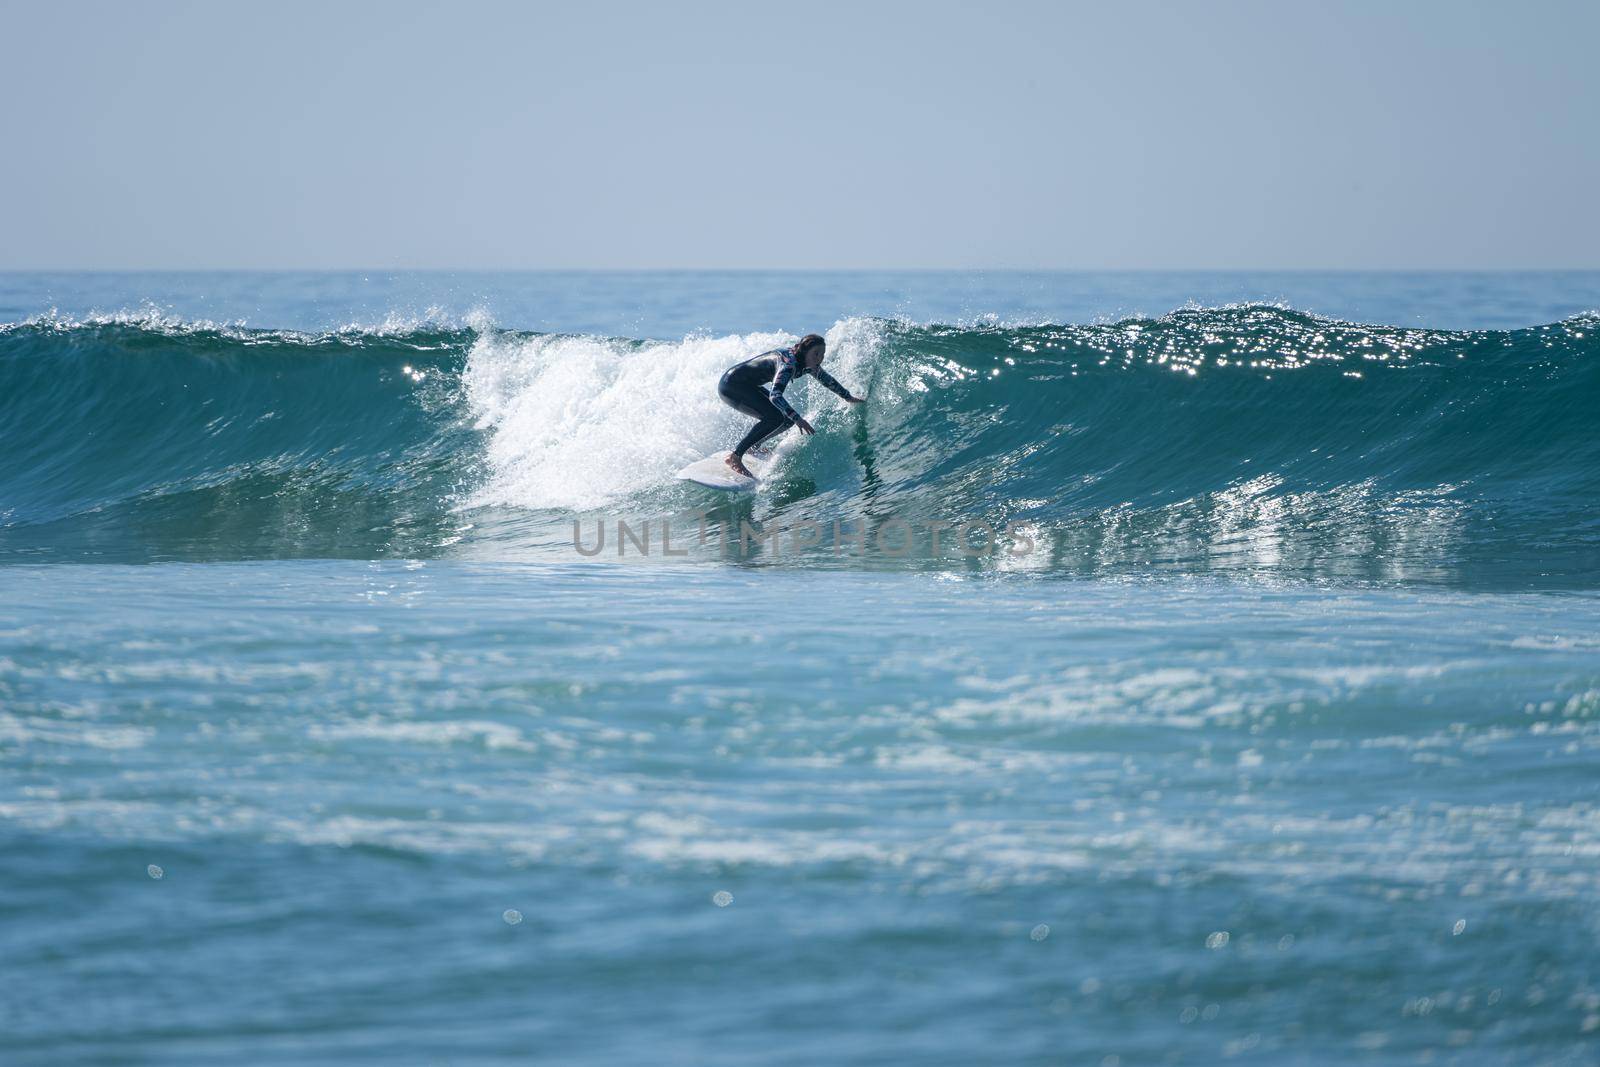 Soul surfer girl riding a wave in Furadouro beach, Ovar - Portugal.